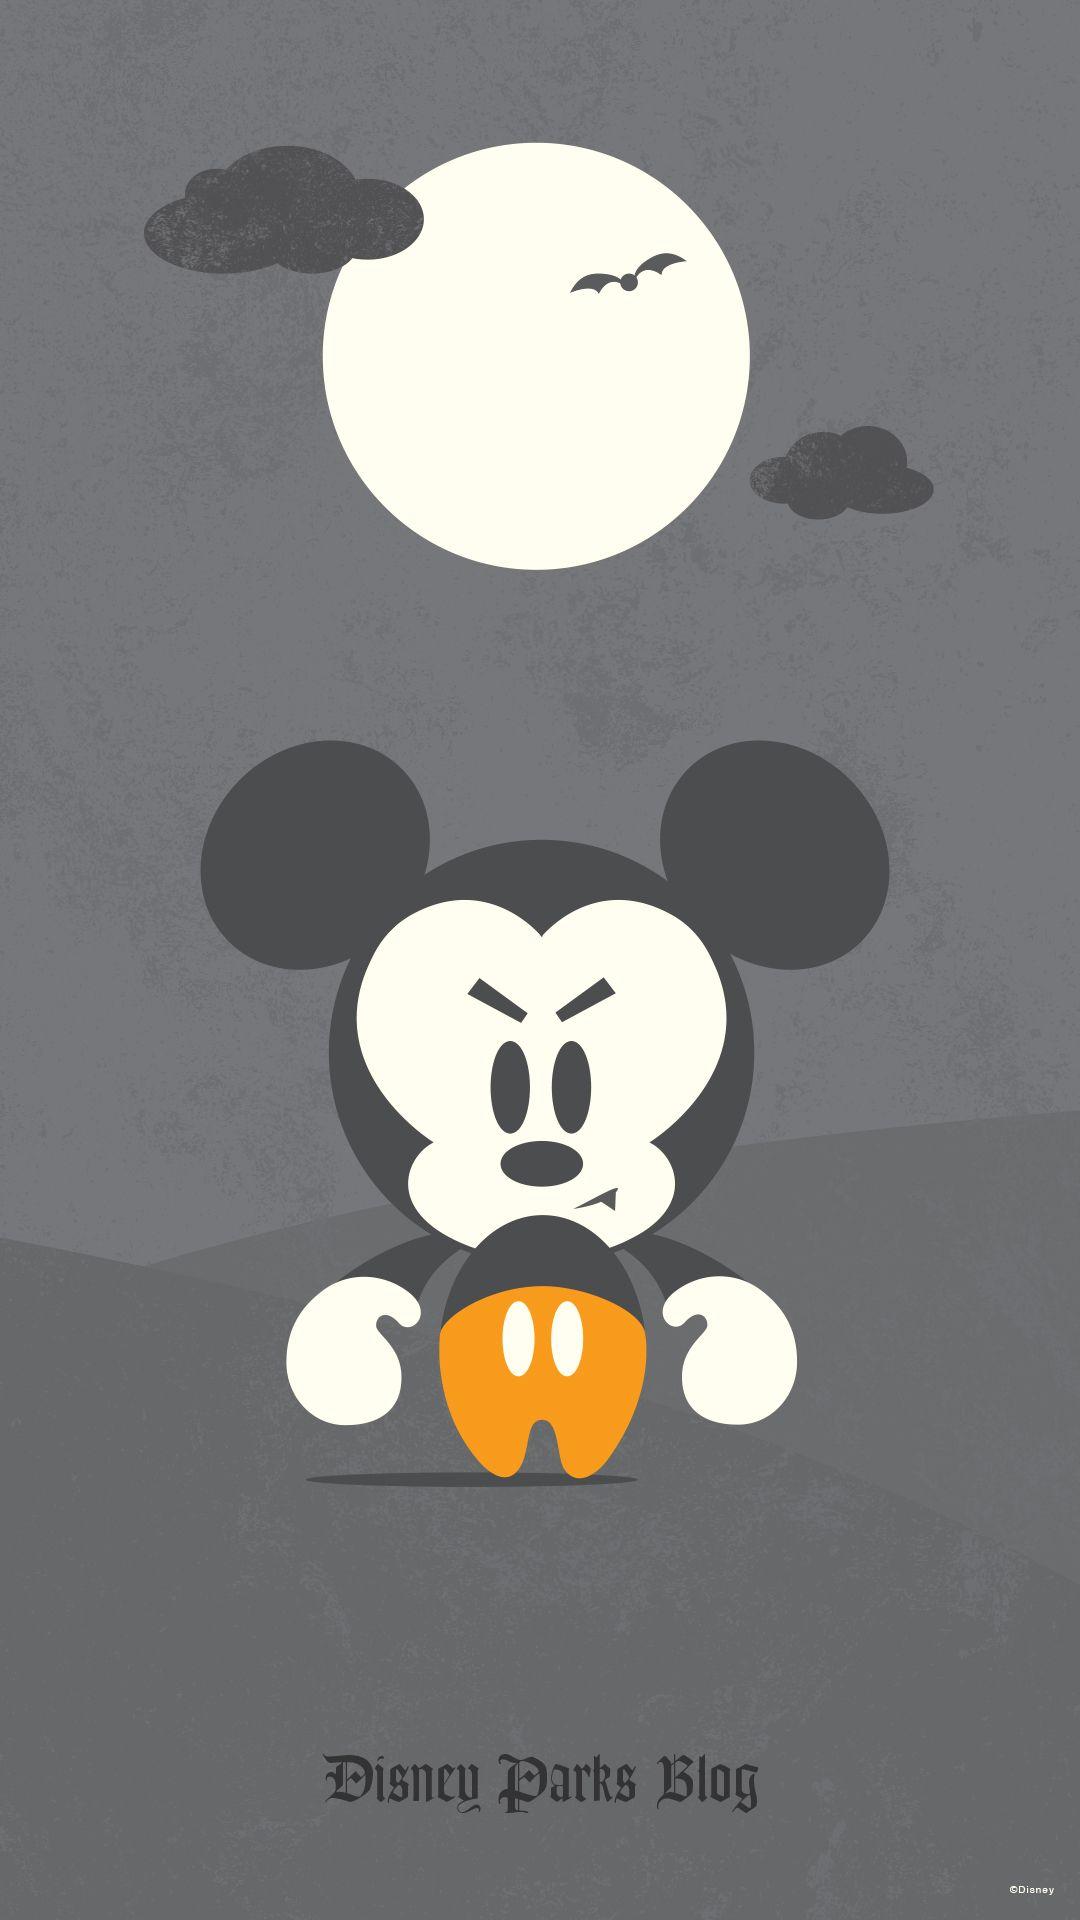 Vampire Mickey wallpaper. iPhone Wallpaper. Disney